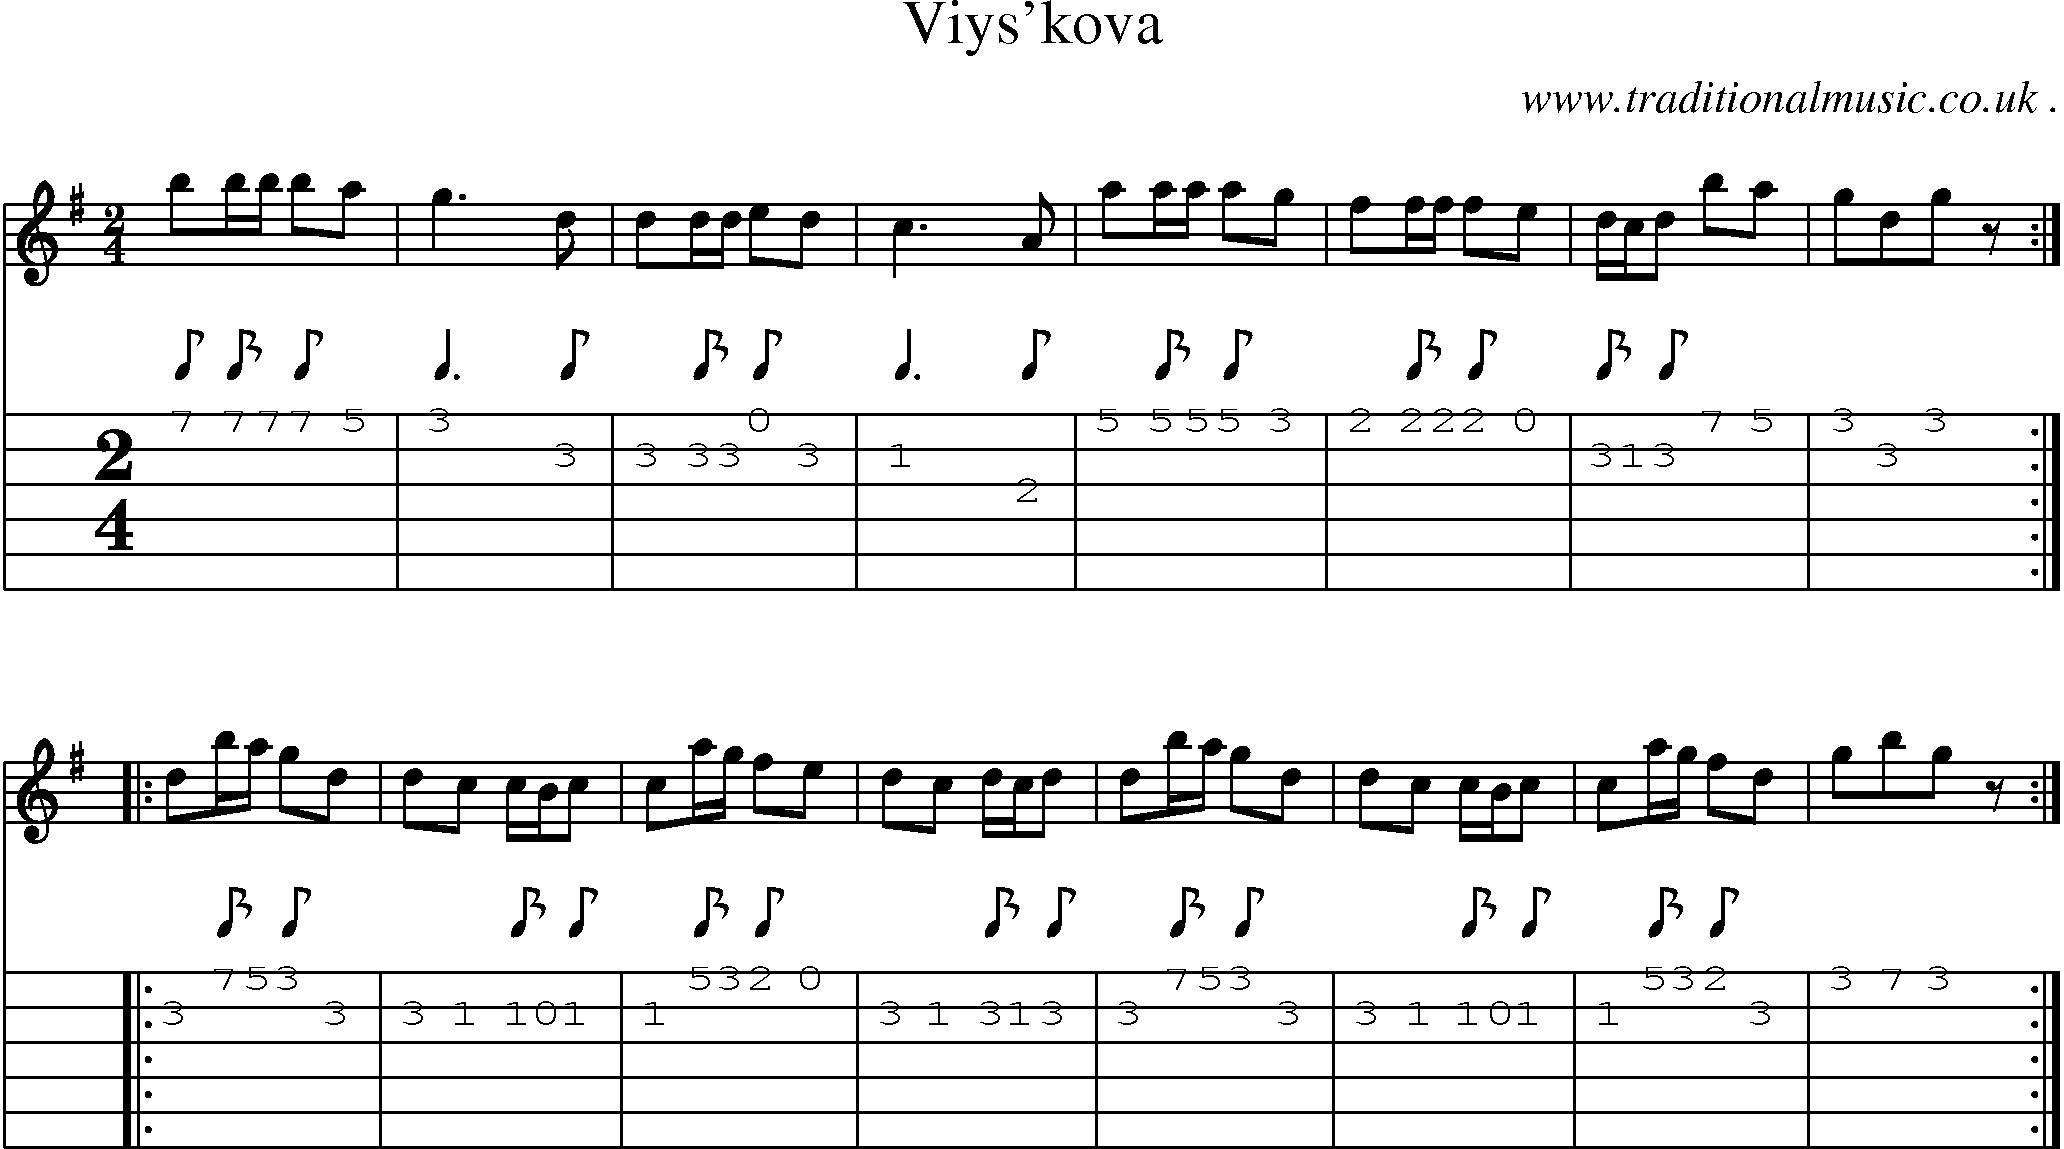 Sheet-Music and Guitar Tabs for Viyskova